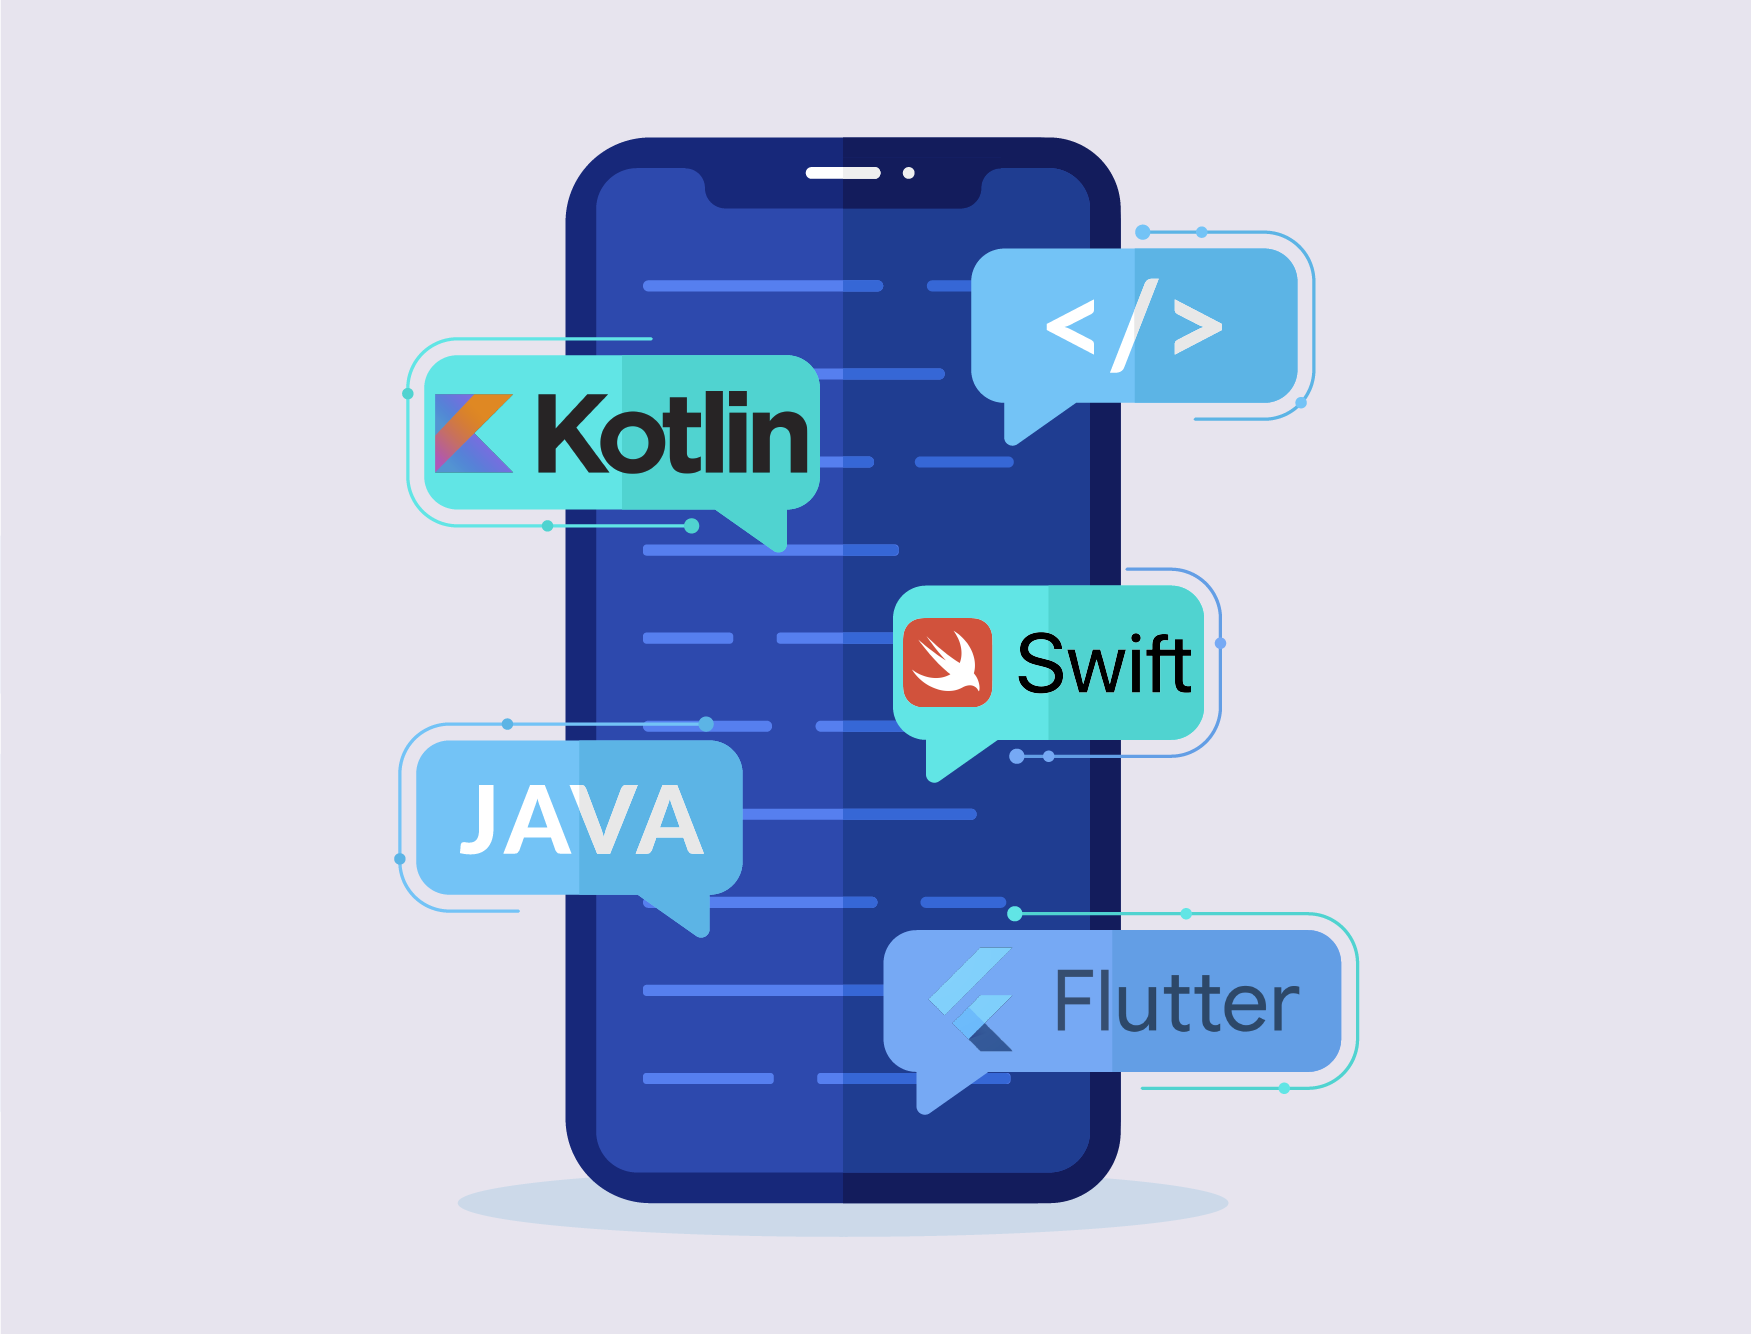 React native, flutter, kotlin, swift logos on Iphone screen